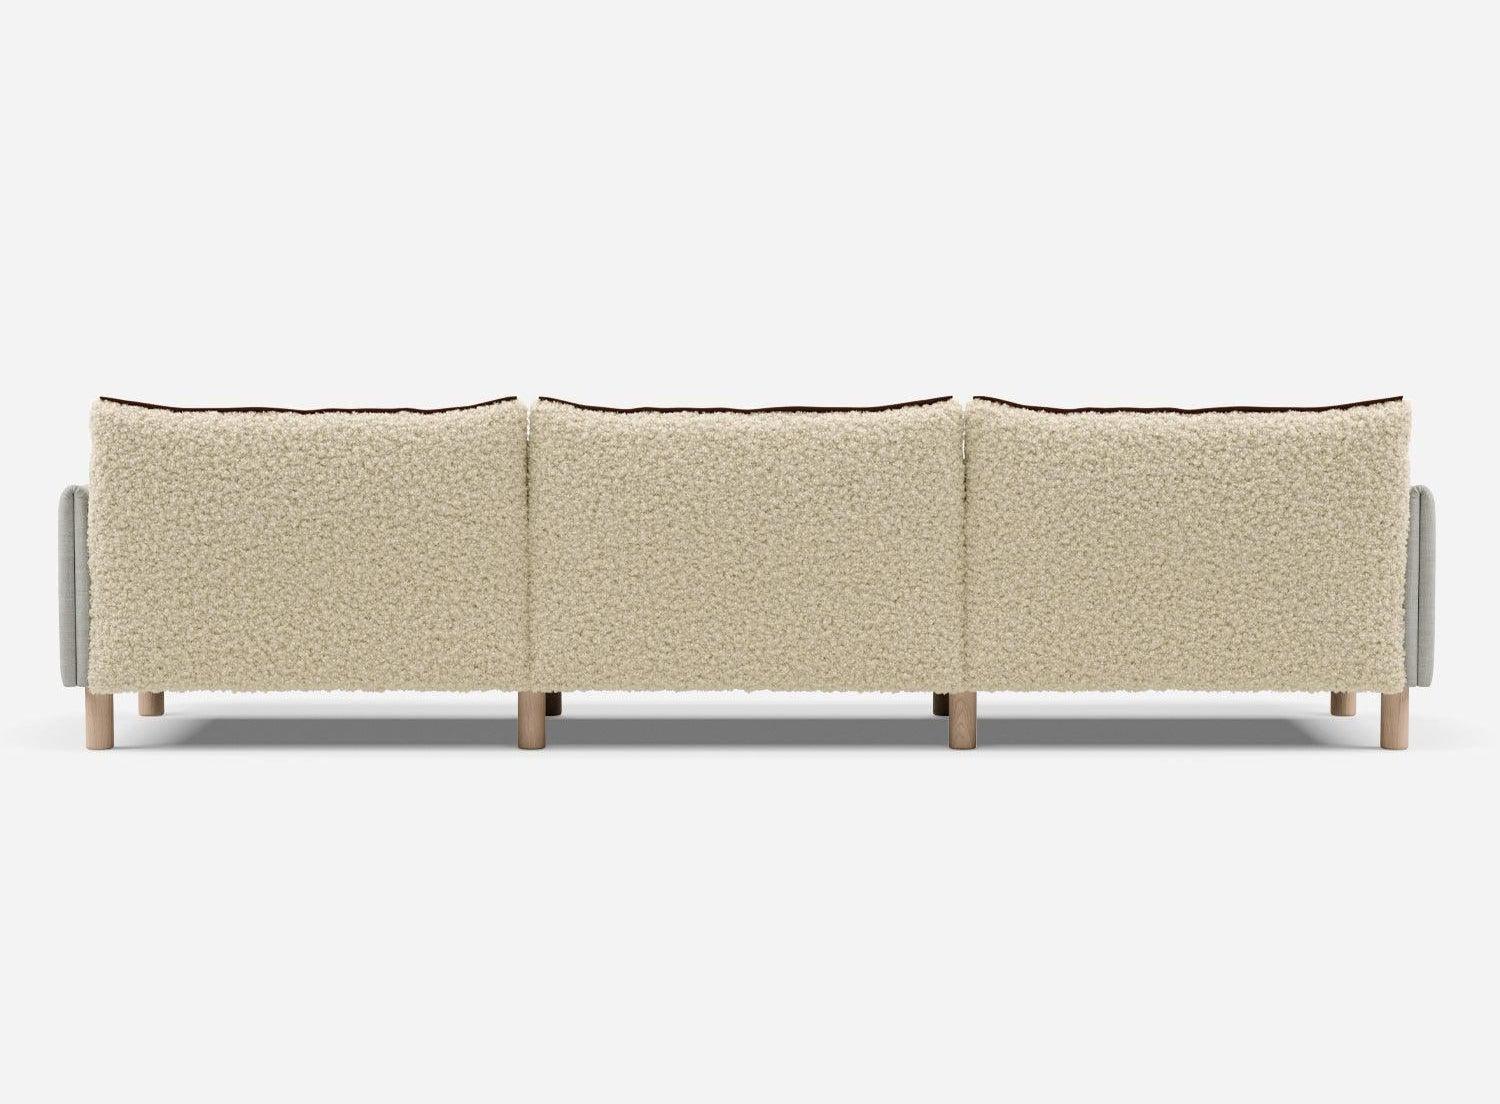 5 Seater Sofa | Weave Ecru - Cozmo @ Cream Fleece Jacket | Brick Trim